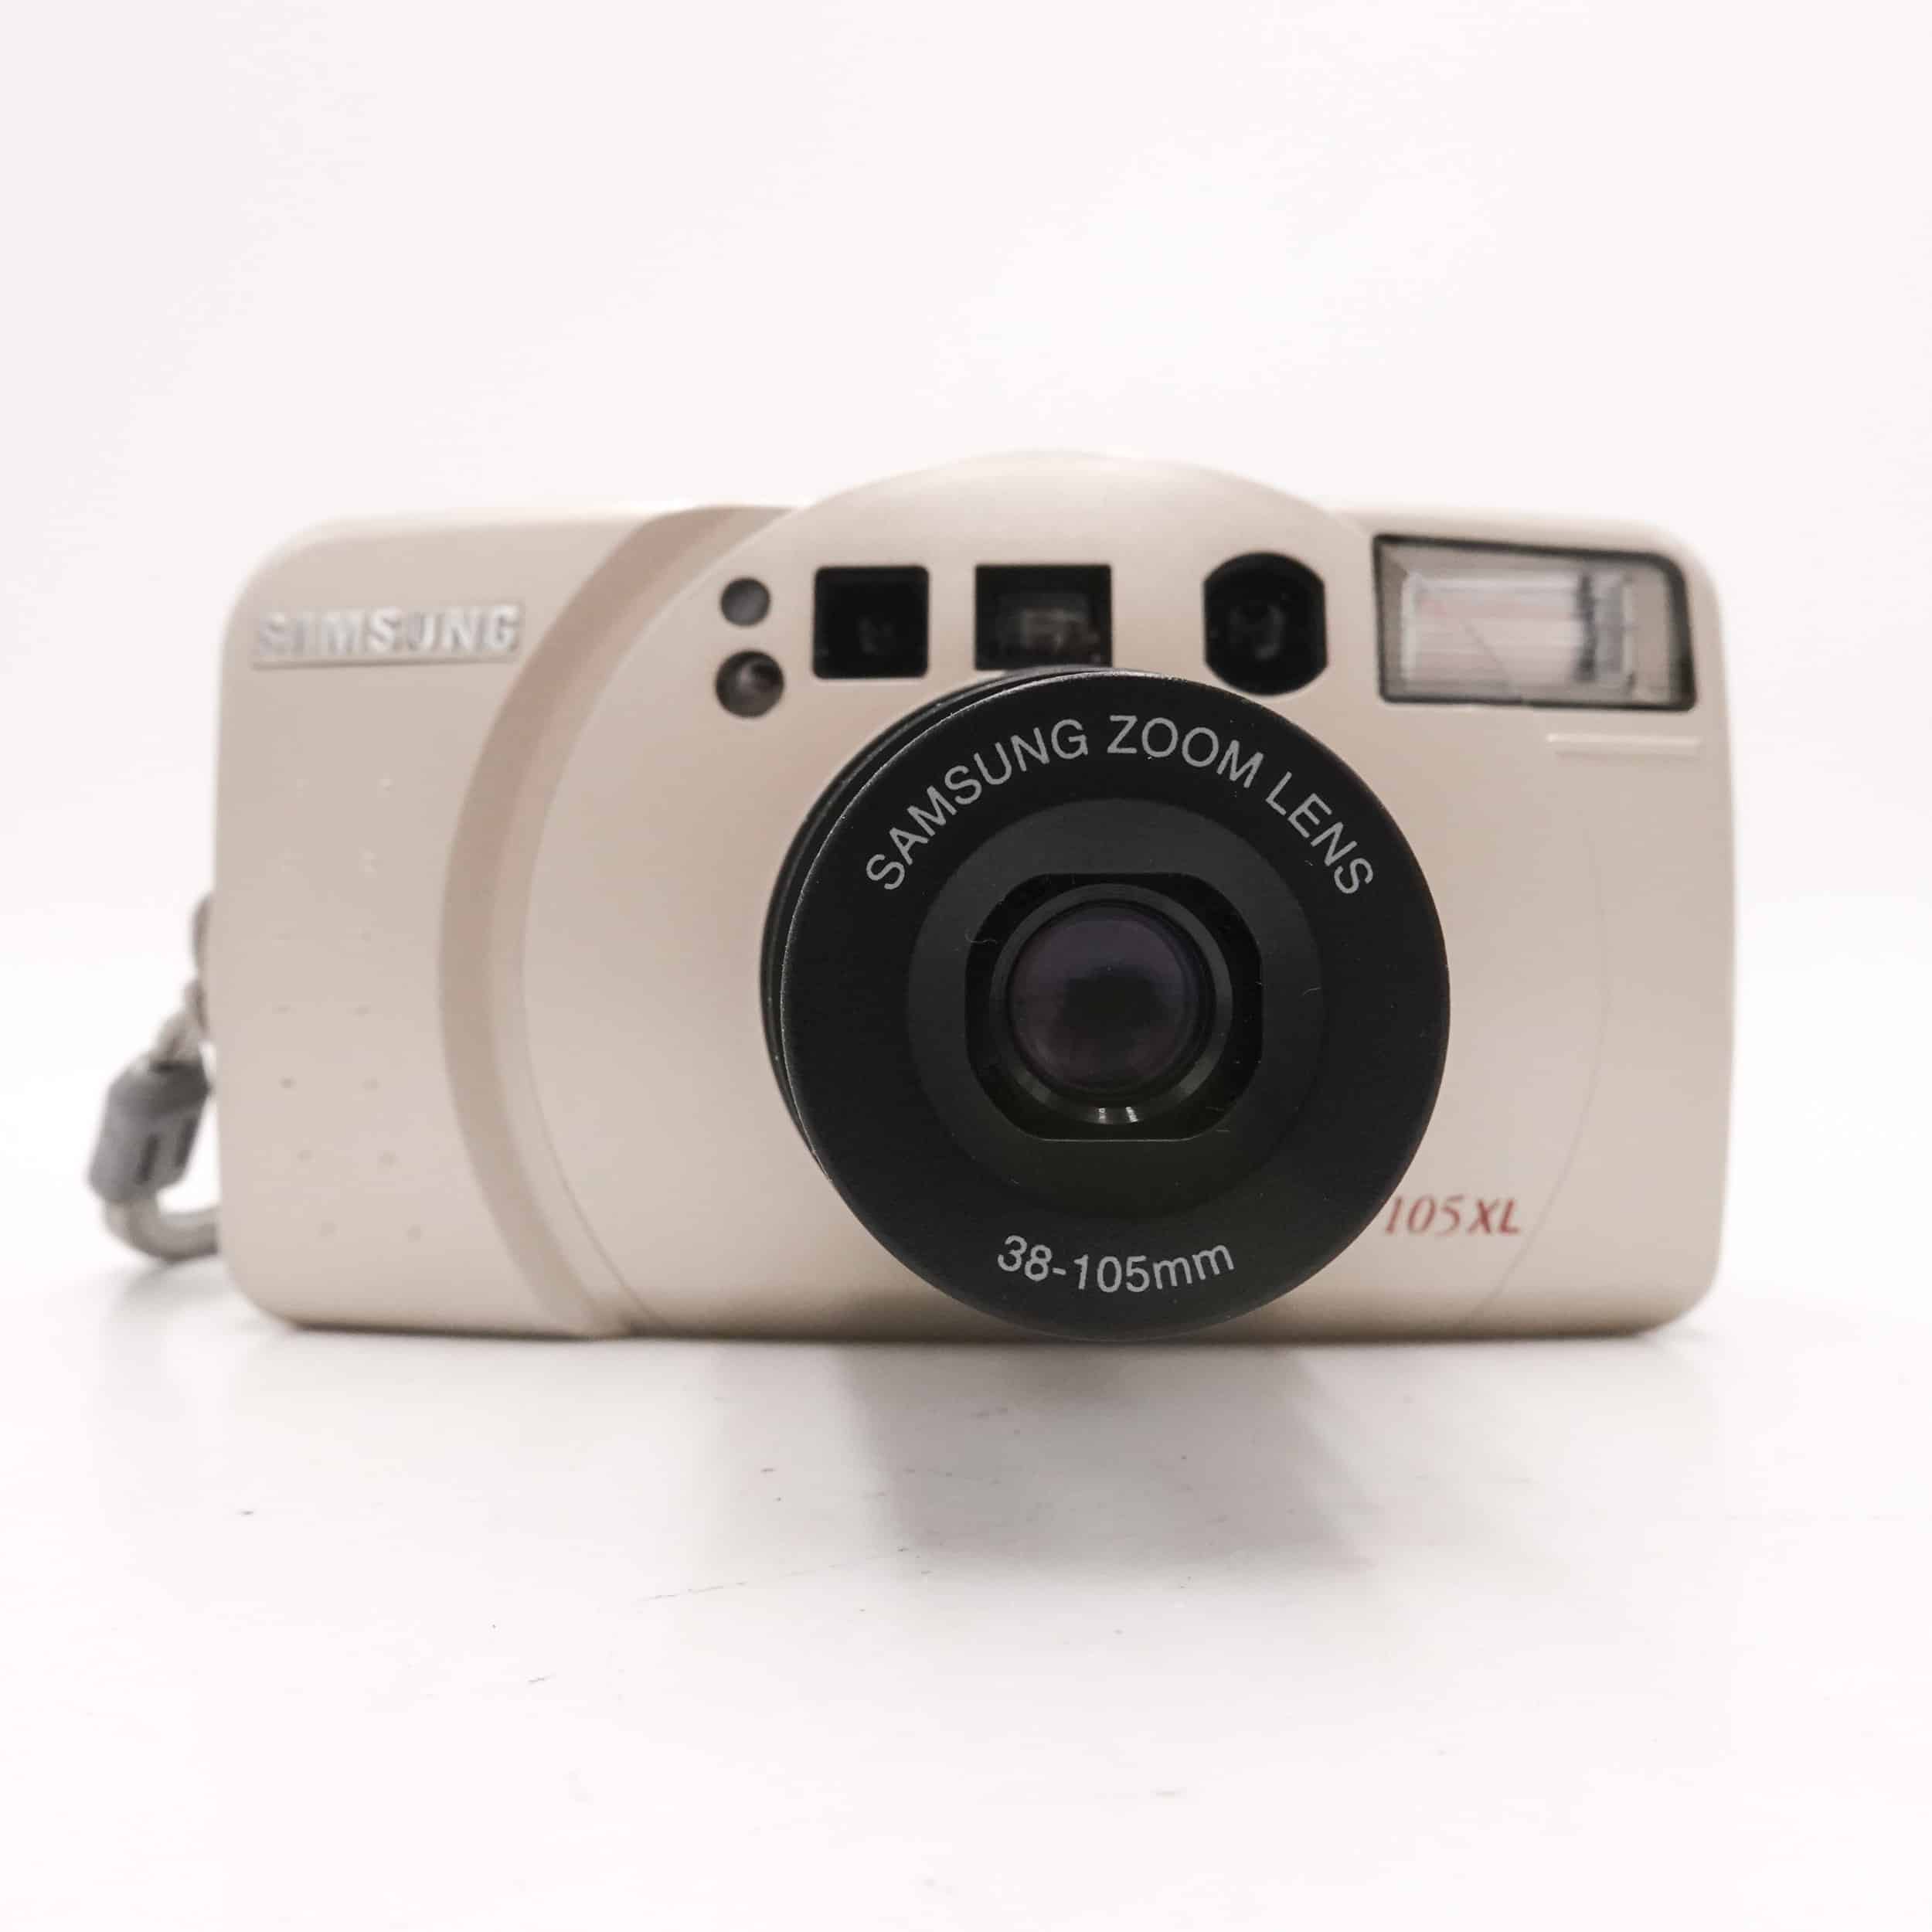 Samsung AF105XL 35mm Film Camera